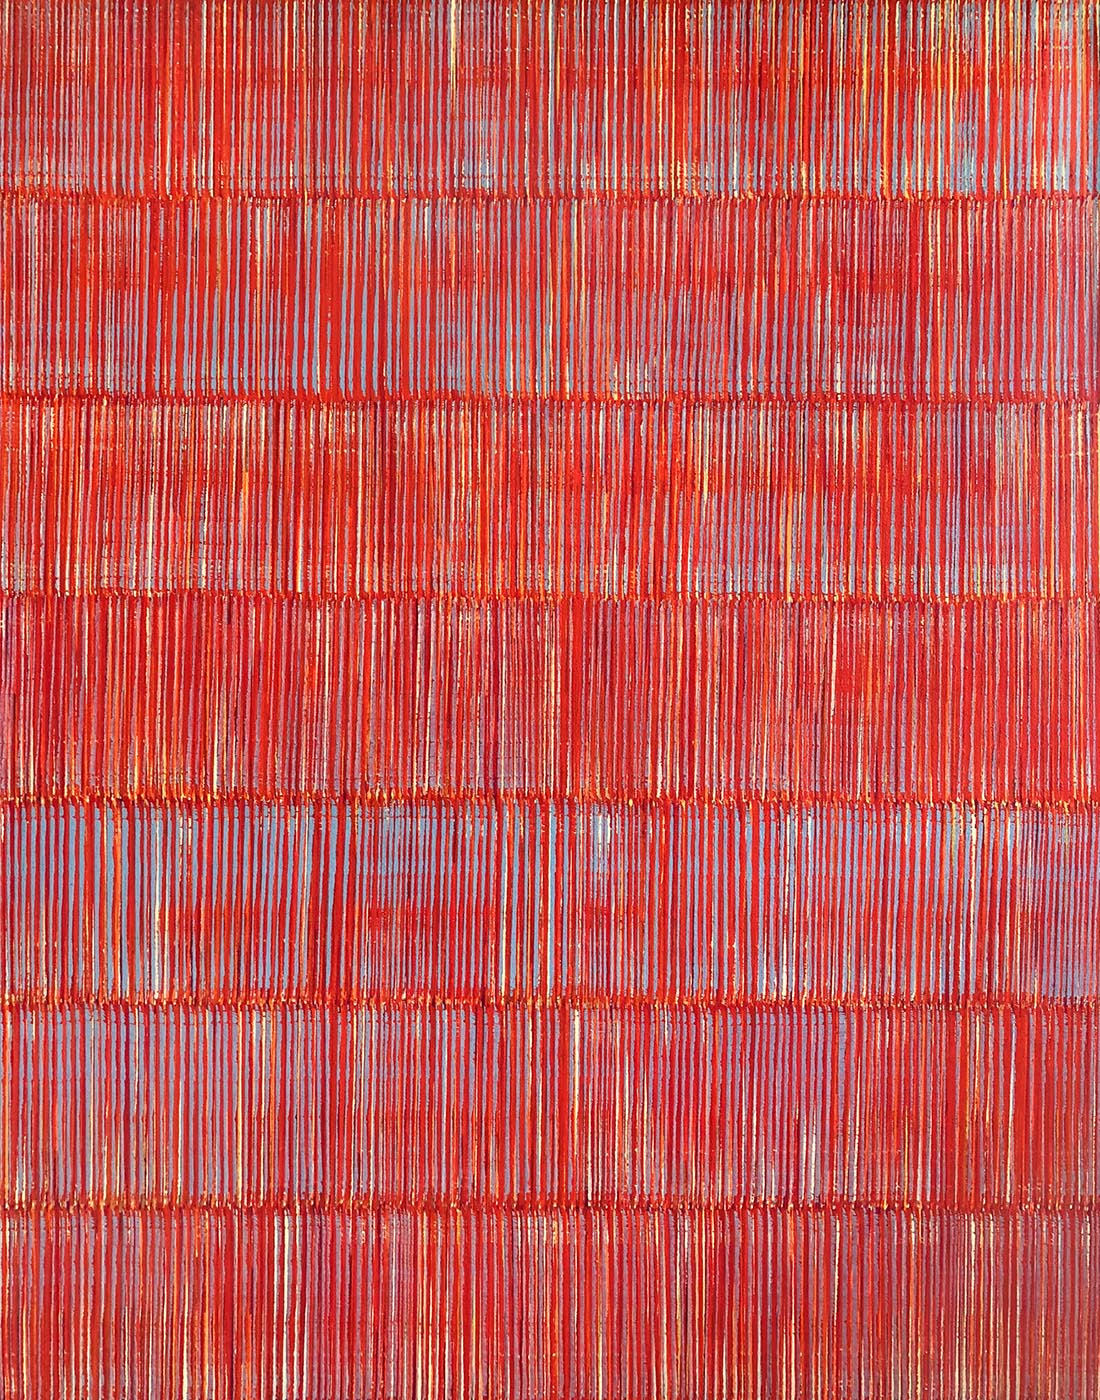 Nikola Dimitrov, KompositionRot, 2018, Pigmente, Bindemittel auf Leinwand, 140 × 110 cm